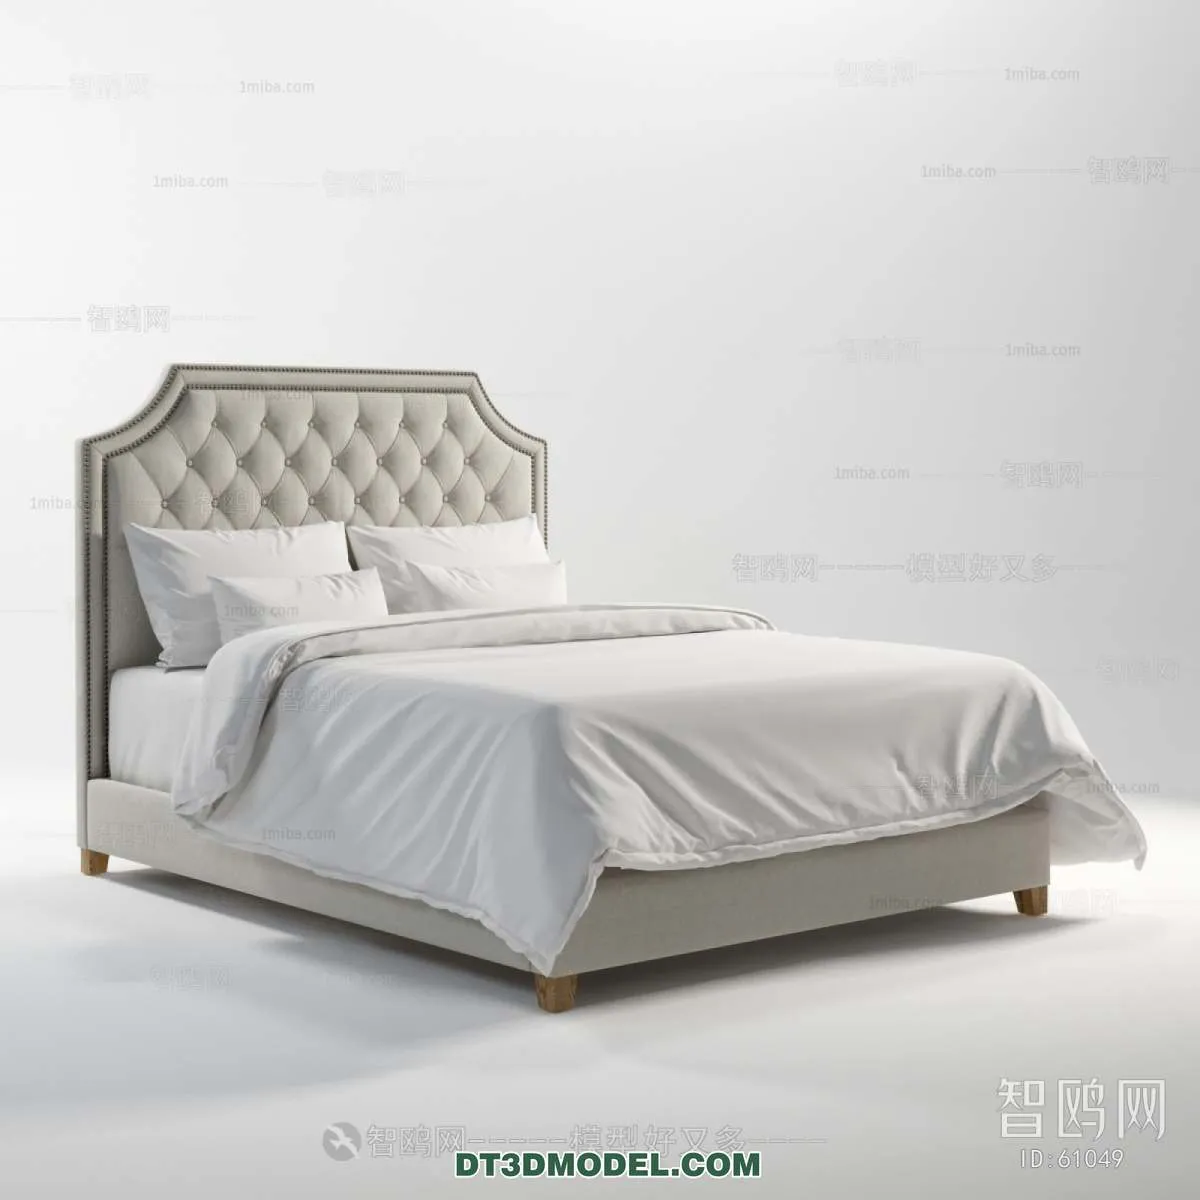 Double Bed 3D Models – 0100